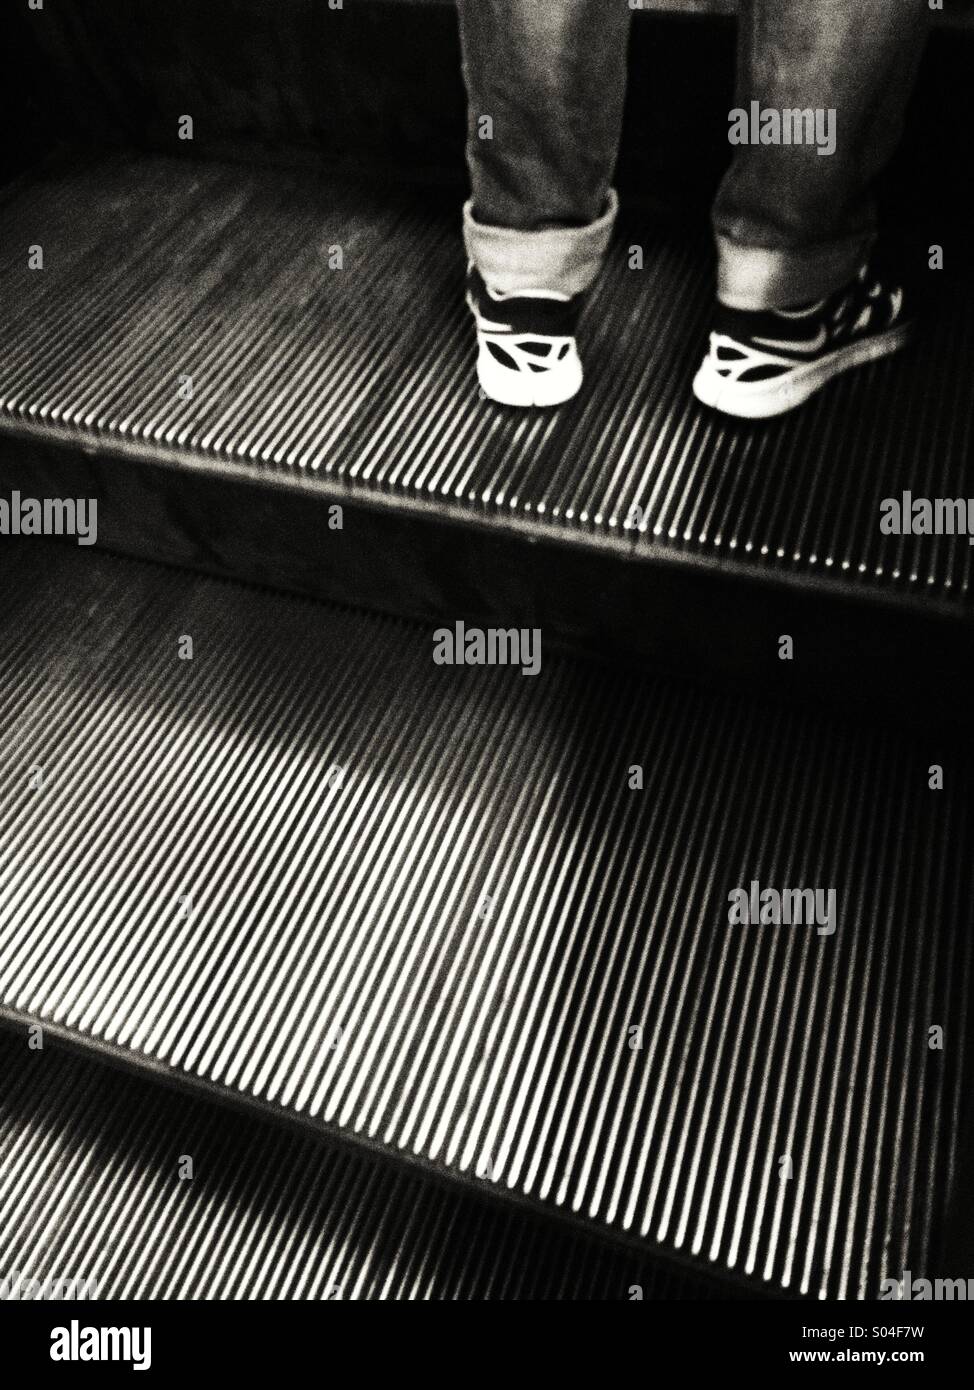 Man standing on escalator Stock Photo - Alamy